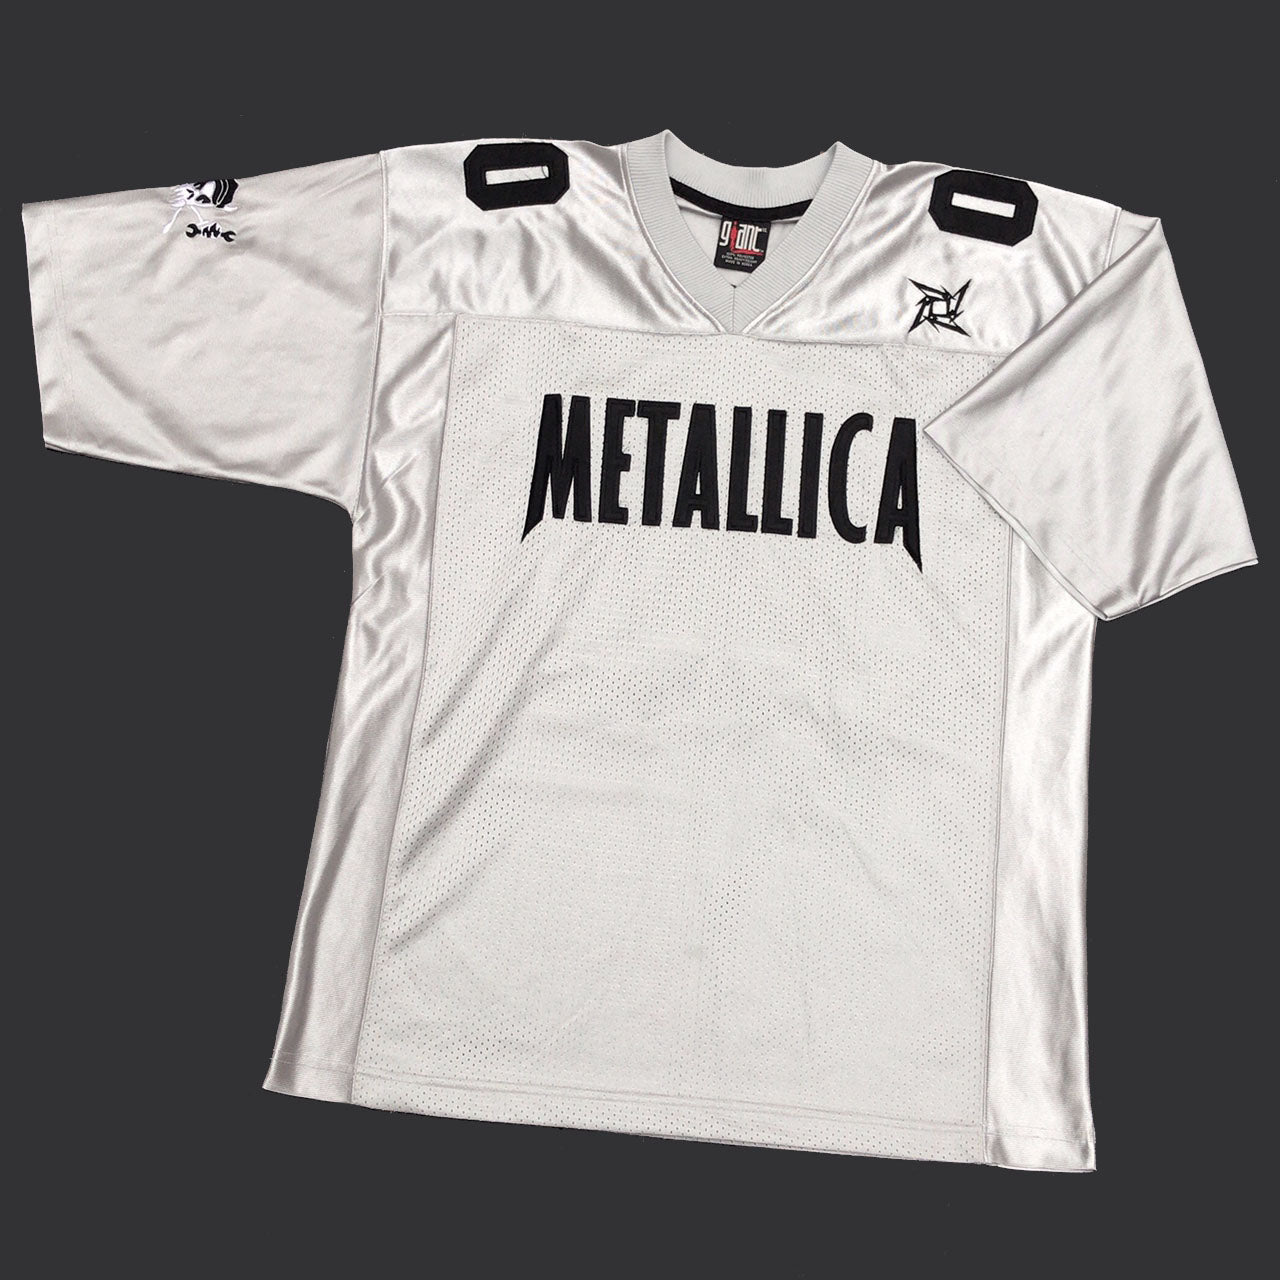 Metallica jersey L/XL – Vintage Sponsor